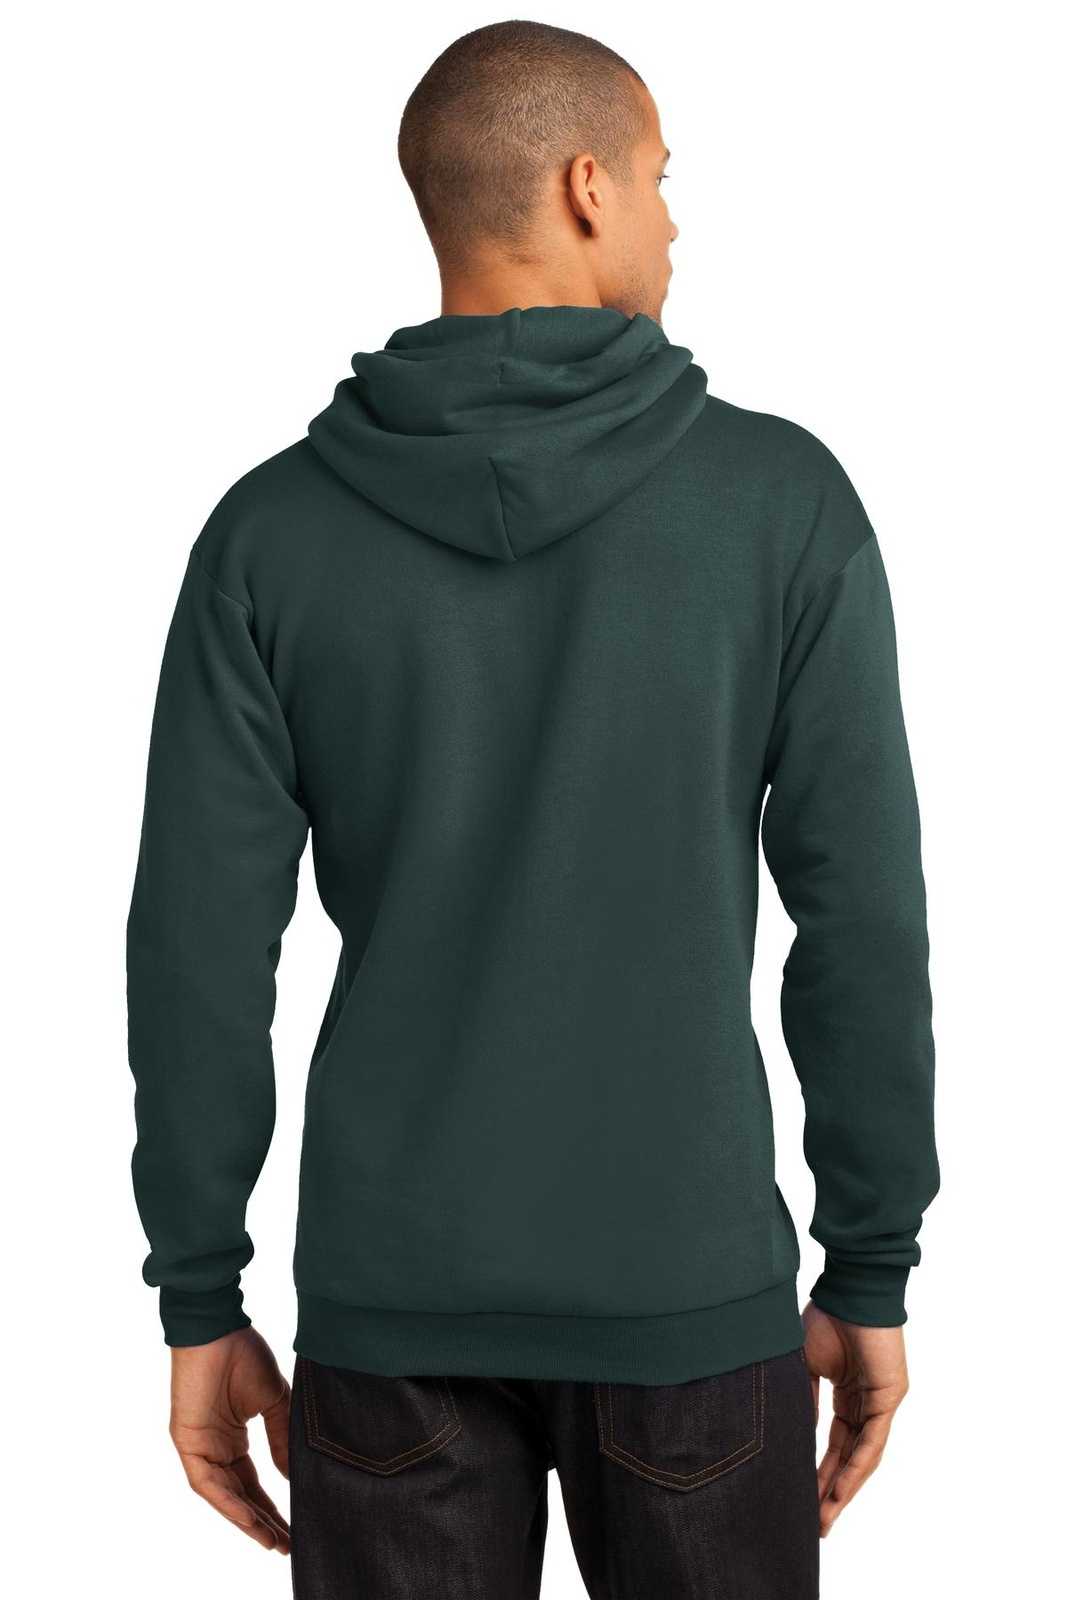 Port & Company PC78H Core Fleece Pullover Hooded Sweatshirt - Dark Green - HIT a Double - 1